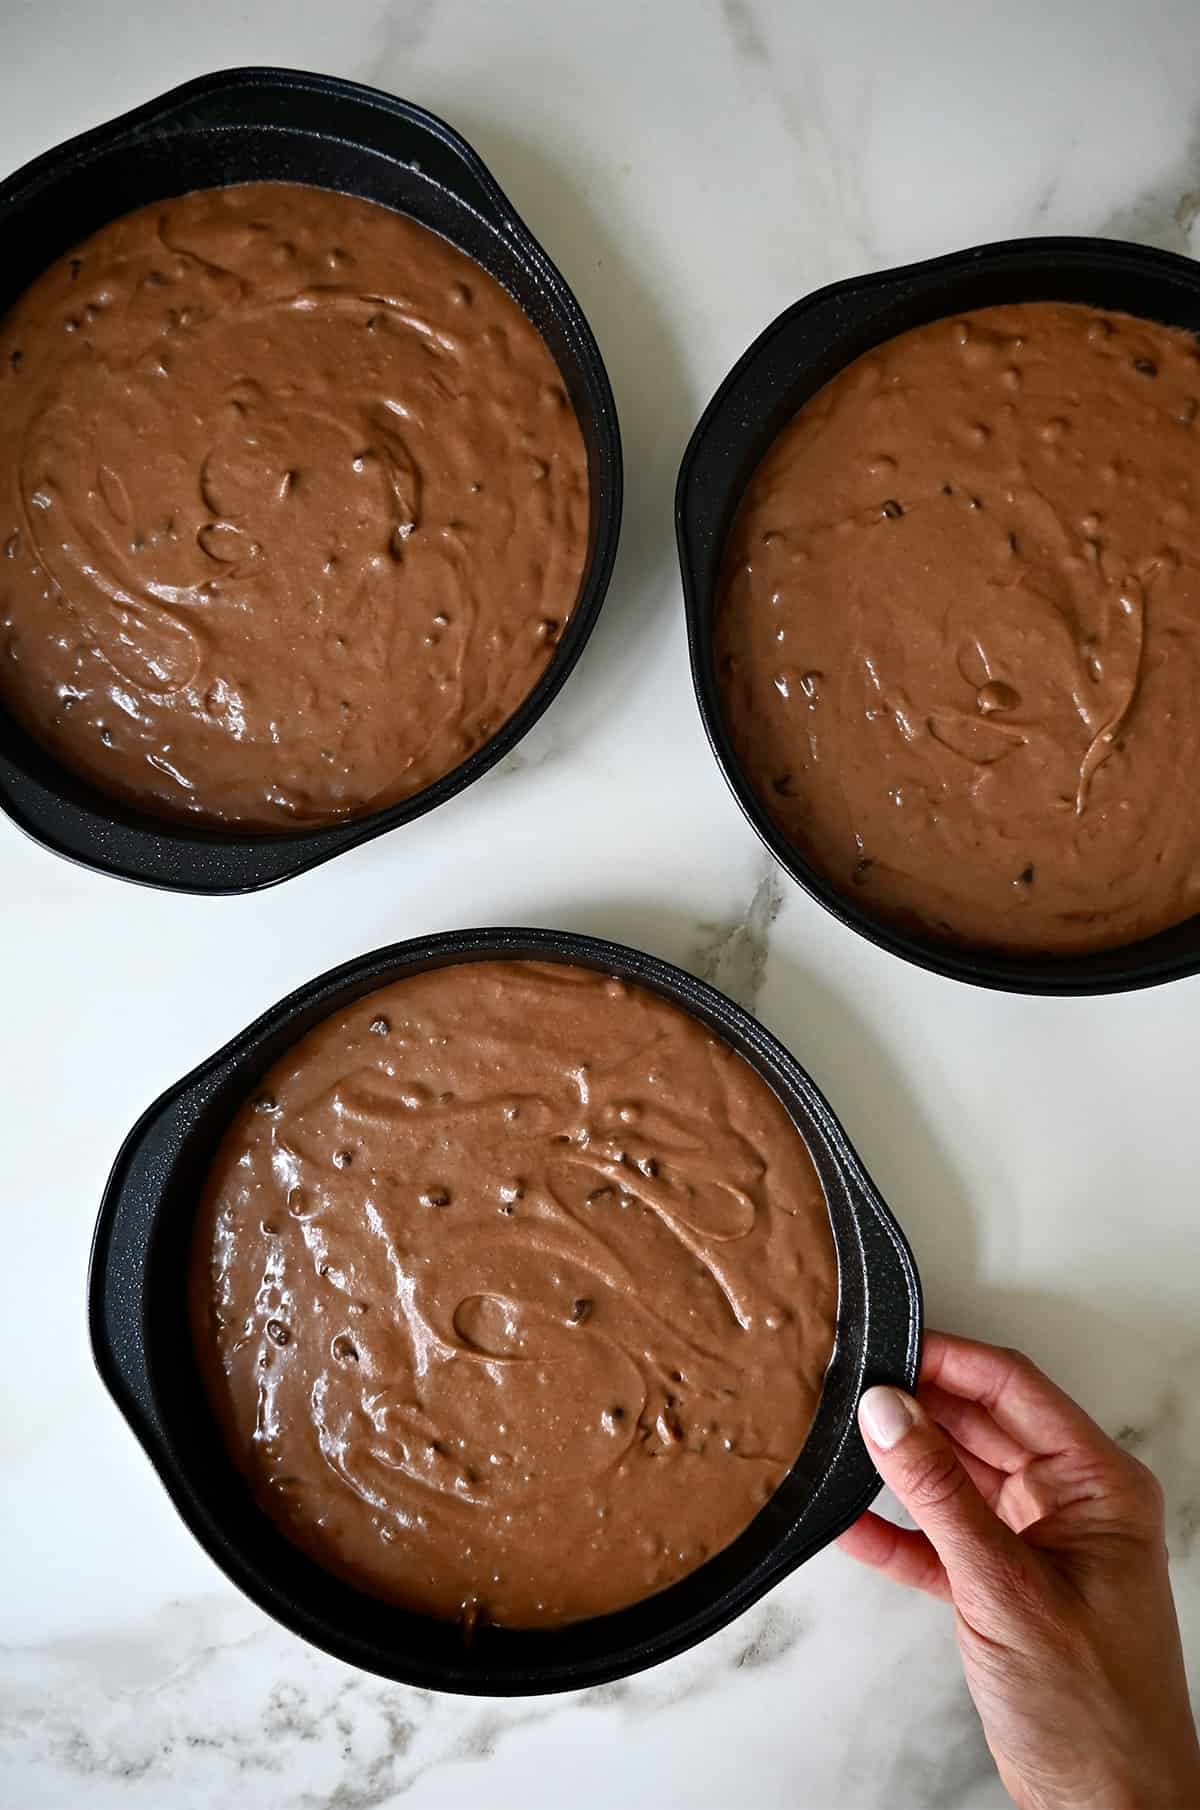 Three round cake pans containing chocolate cake batter.